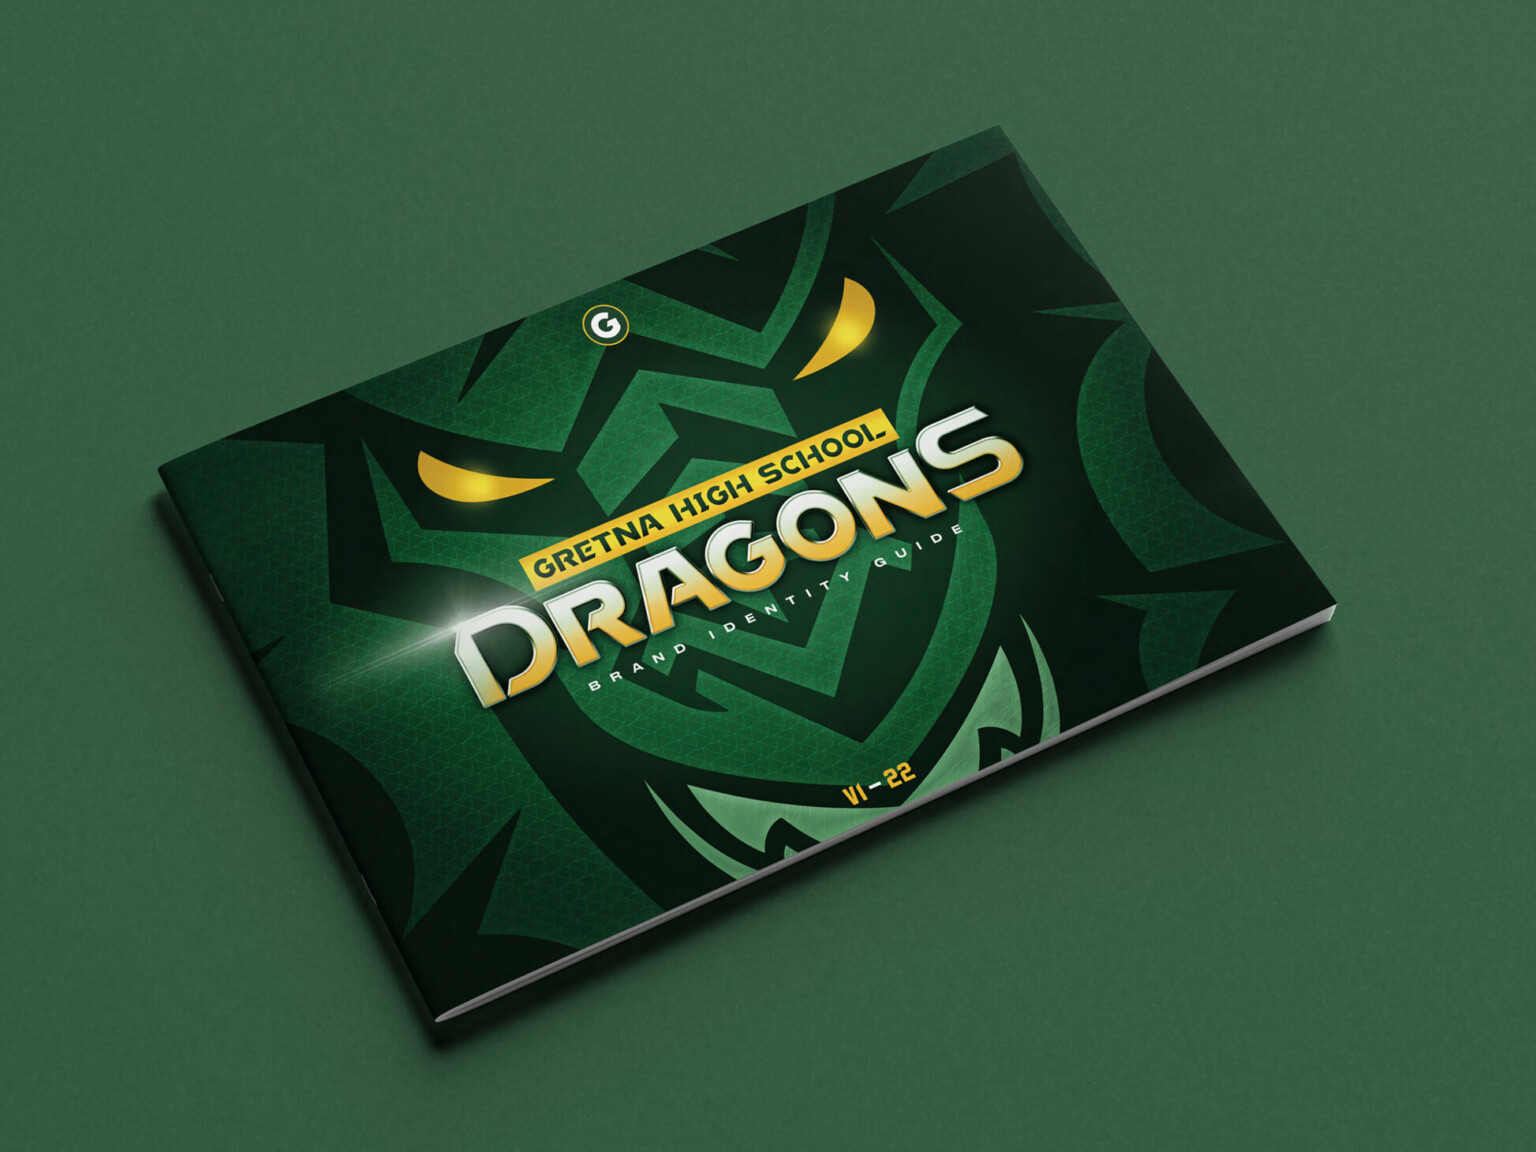 Brand identity guide for Gretna High School Dragons, in Nebraska. Cover reads Dragons in yellow over green logo